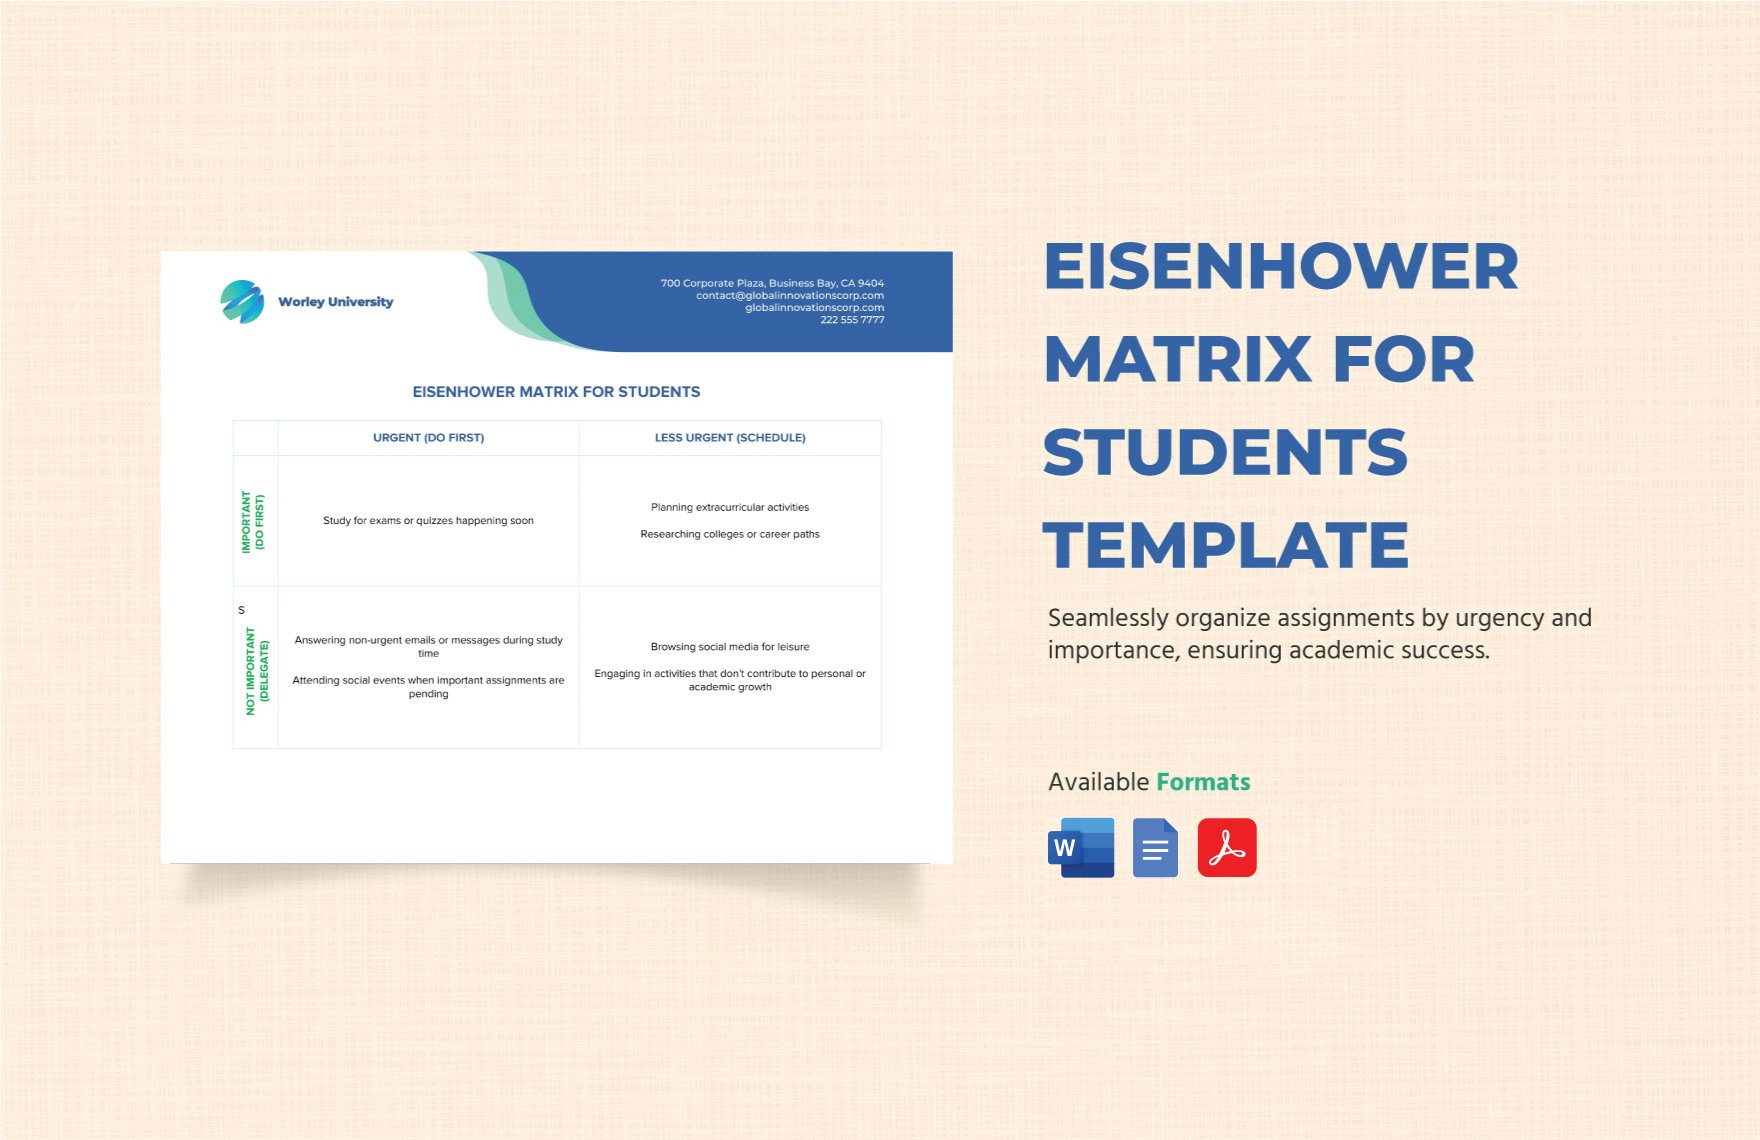 Eisenhower Matrix for Students Template